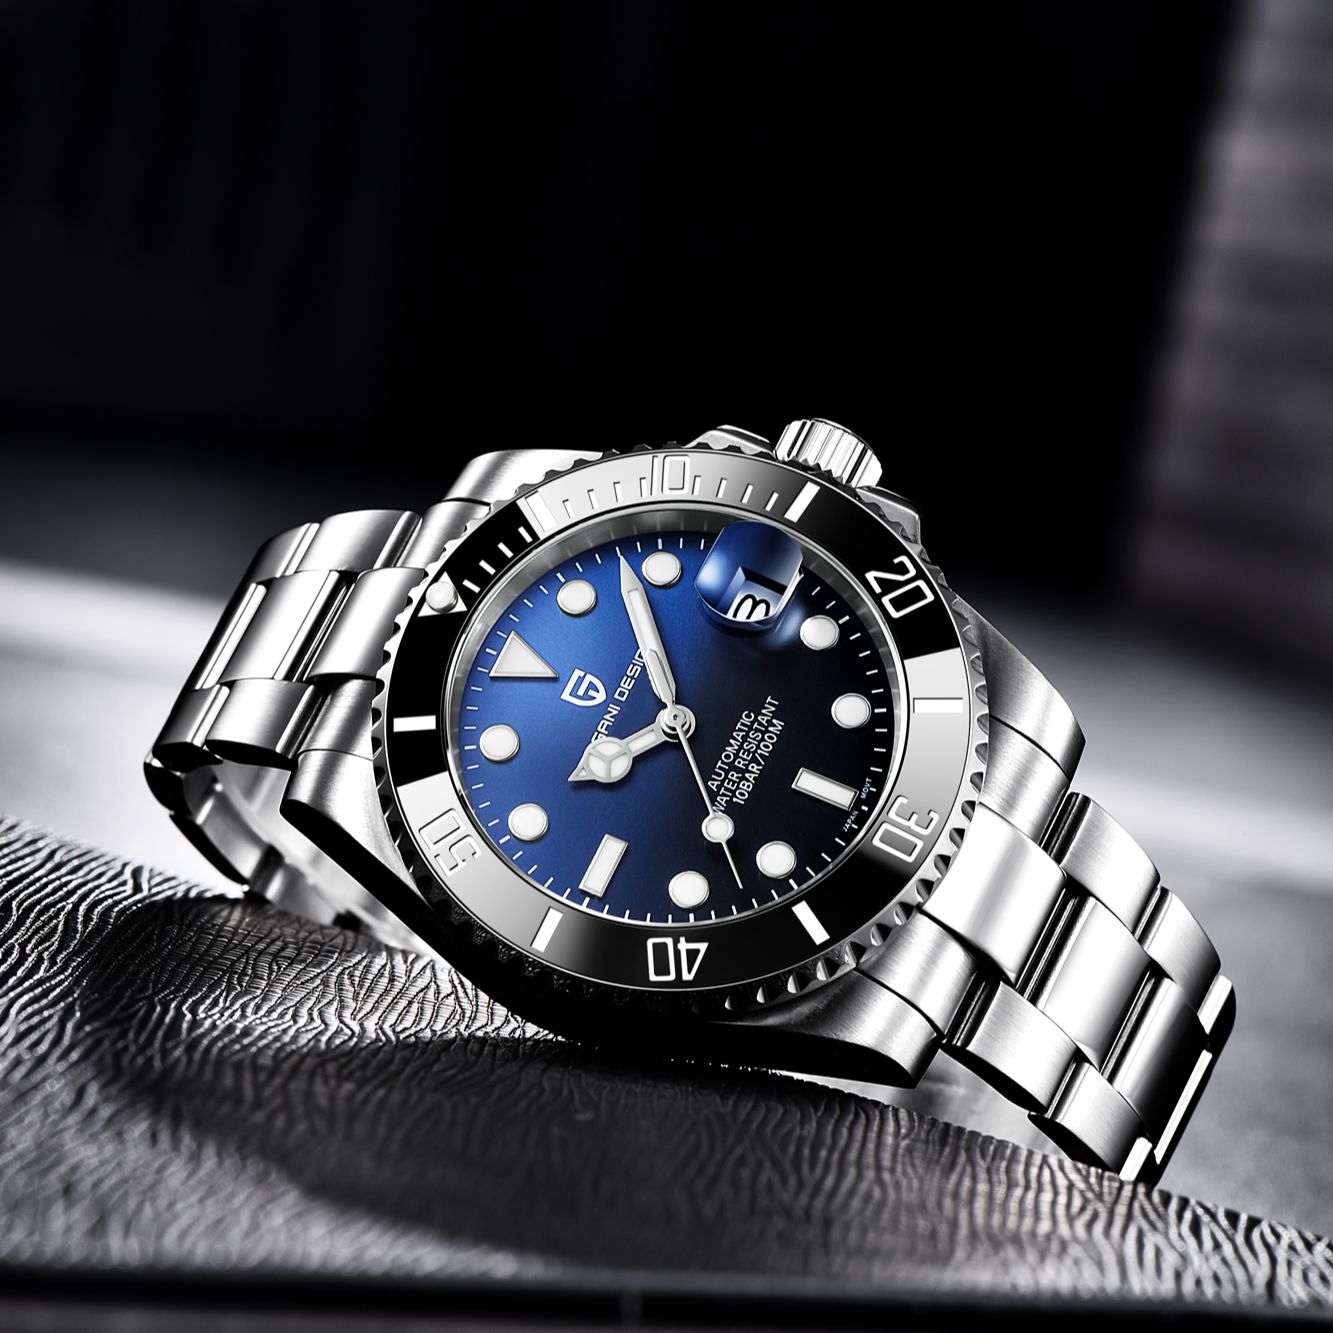 2022 PAGANI DESIGN 40mm Luxury Men Wristwatch Stainless Steel Automatic Mechanical Watch Waterproof